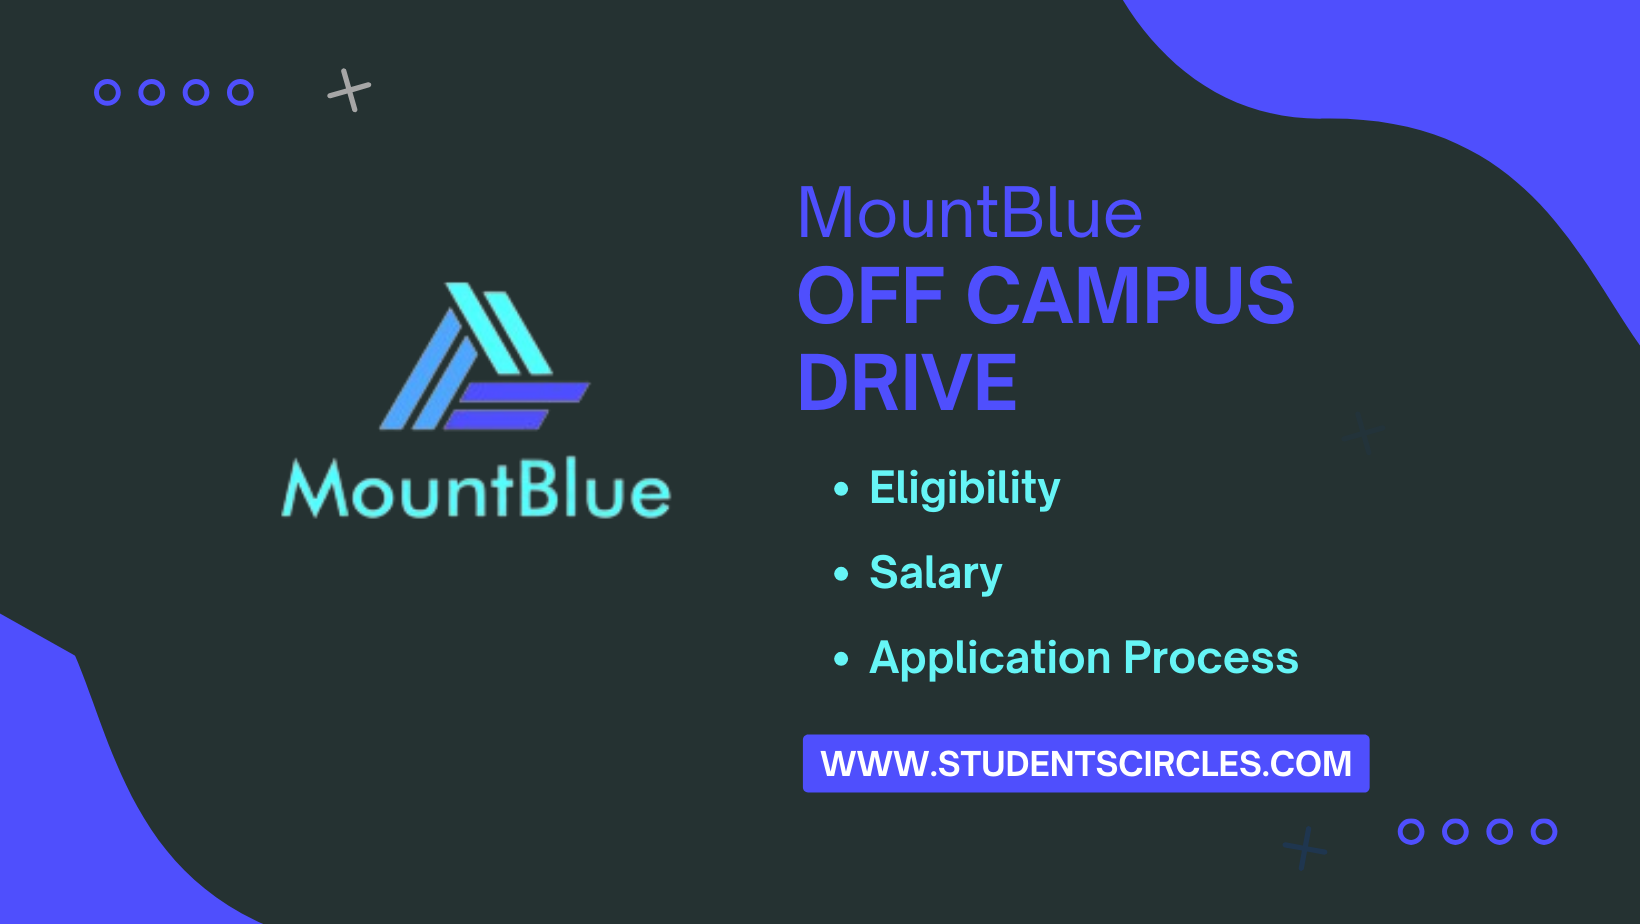 MountBlue Off Campus Drive